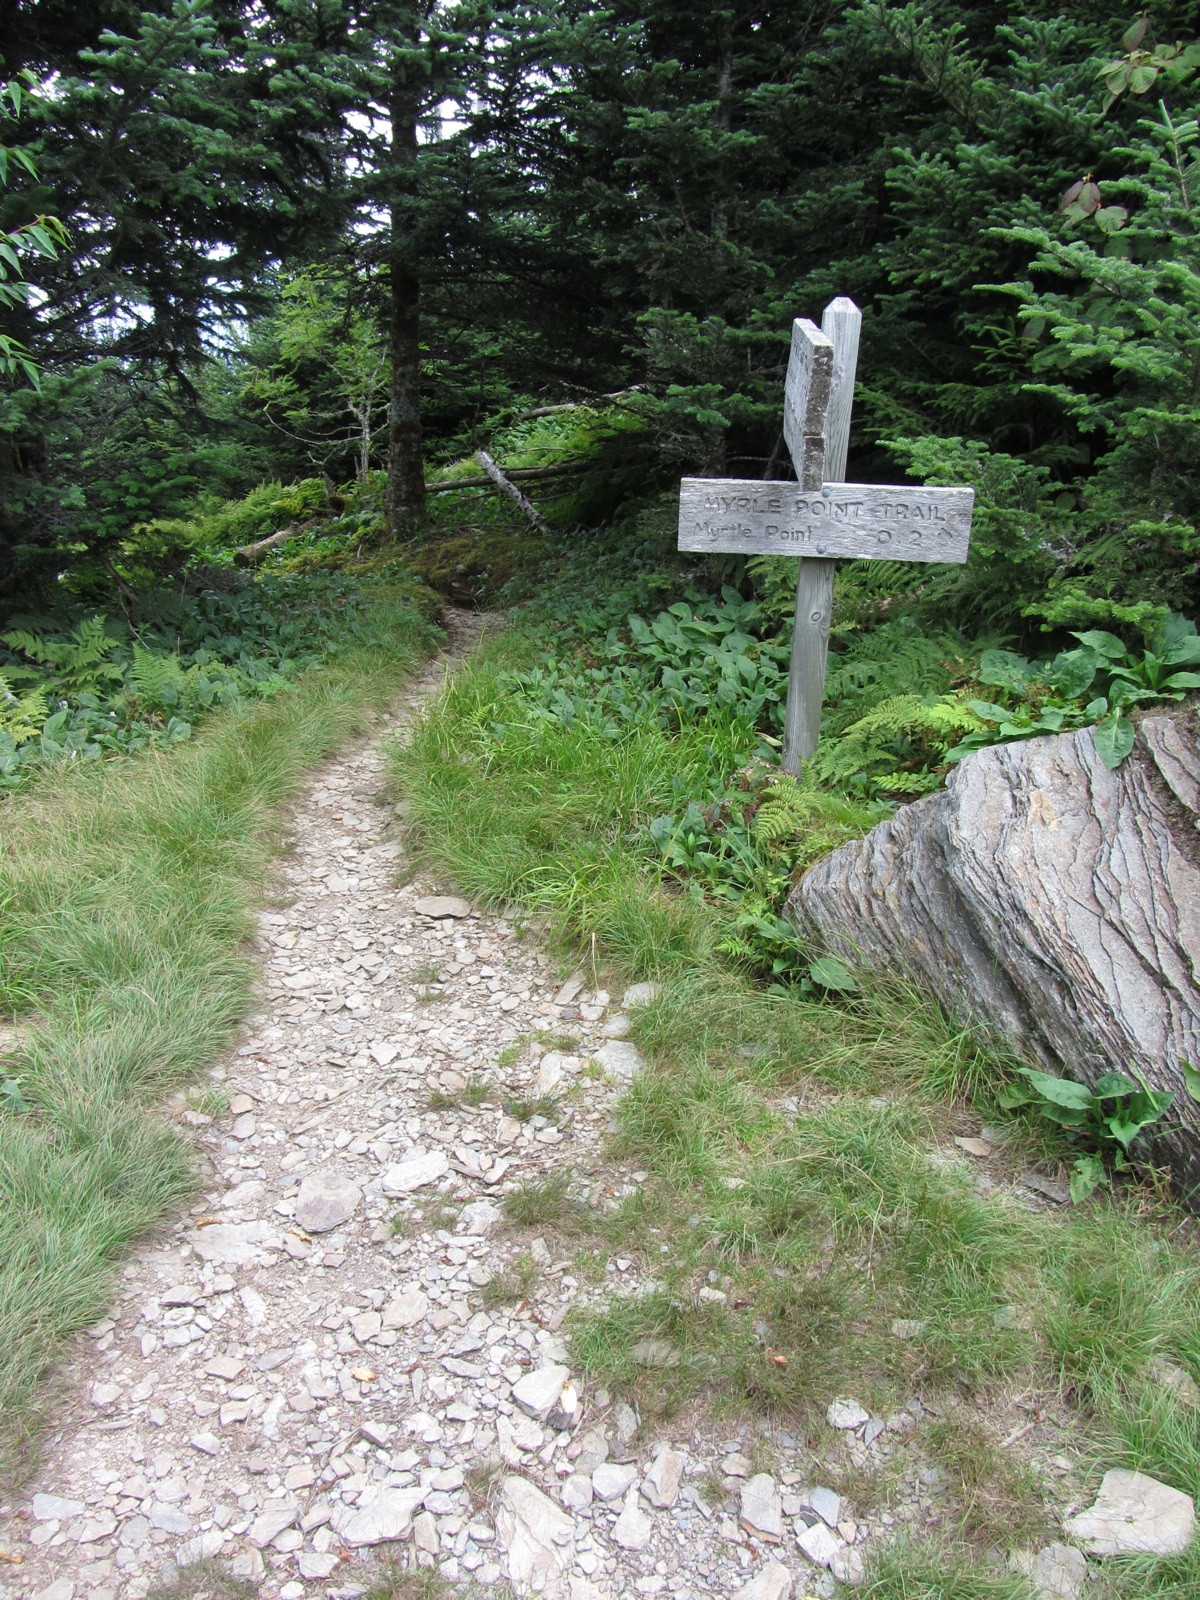 Myrle Point Trail Sign Redux